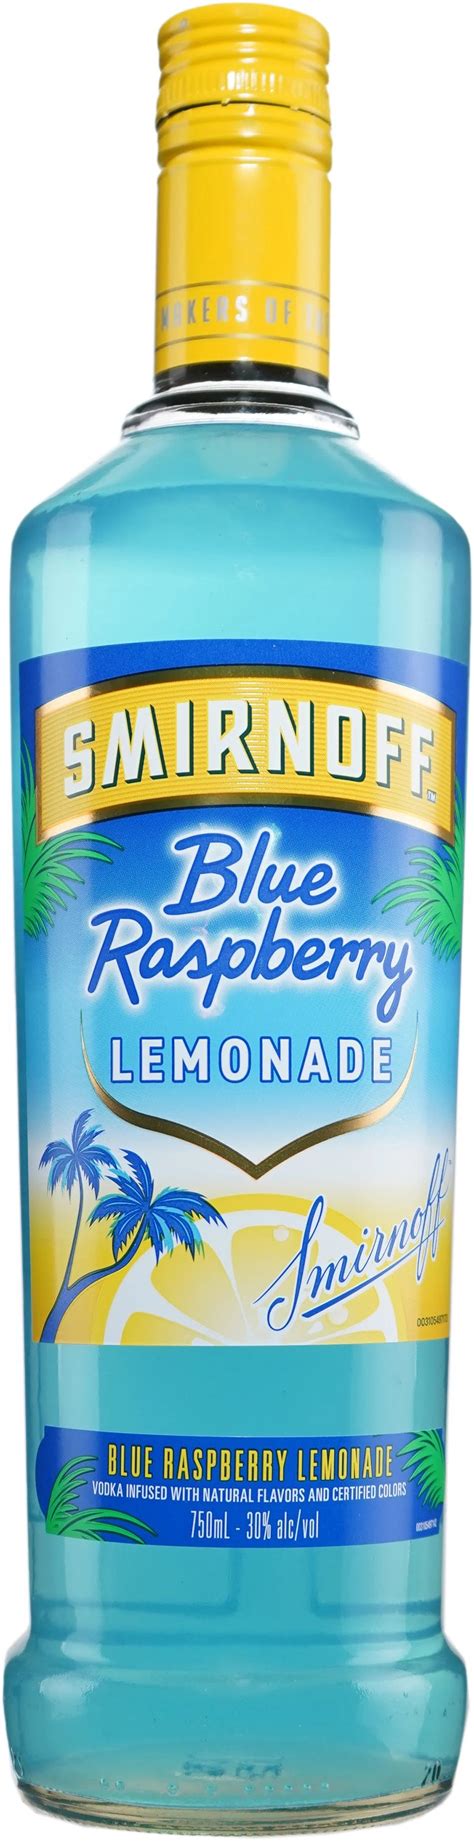 Smirnoff Blue Raspberry Lemonade Vodka 750ml Busters Liquors And Wines